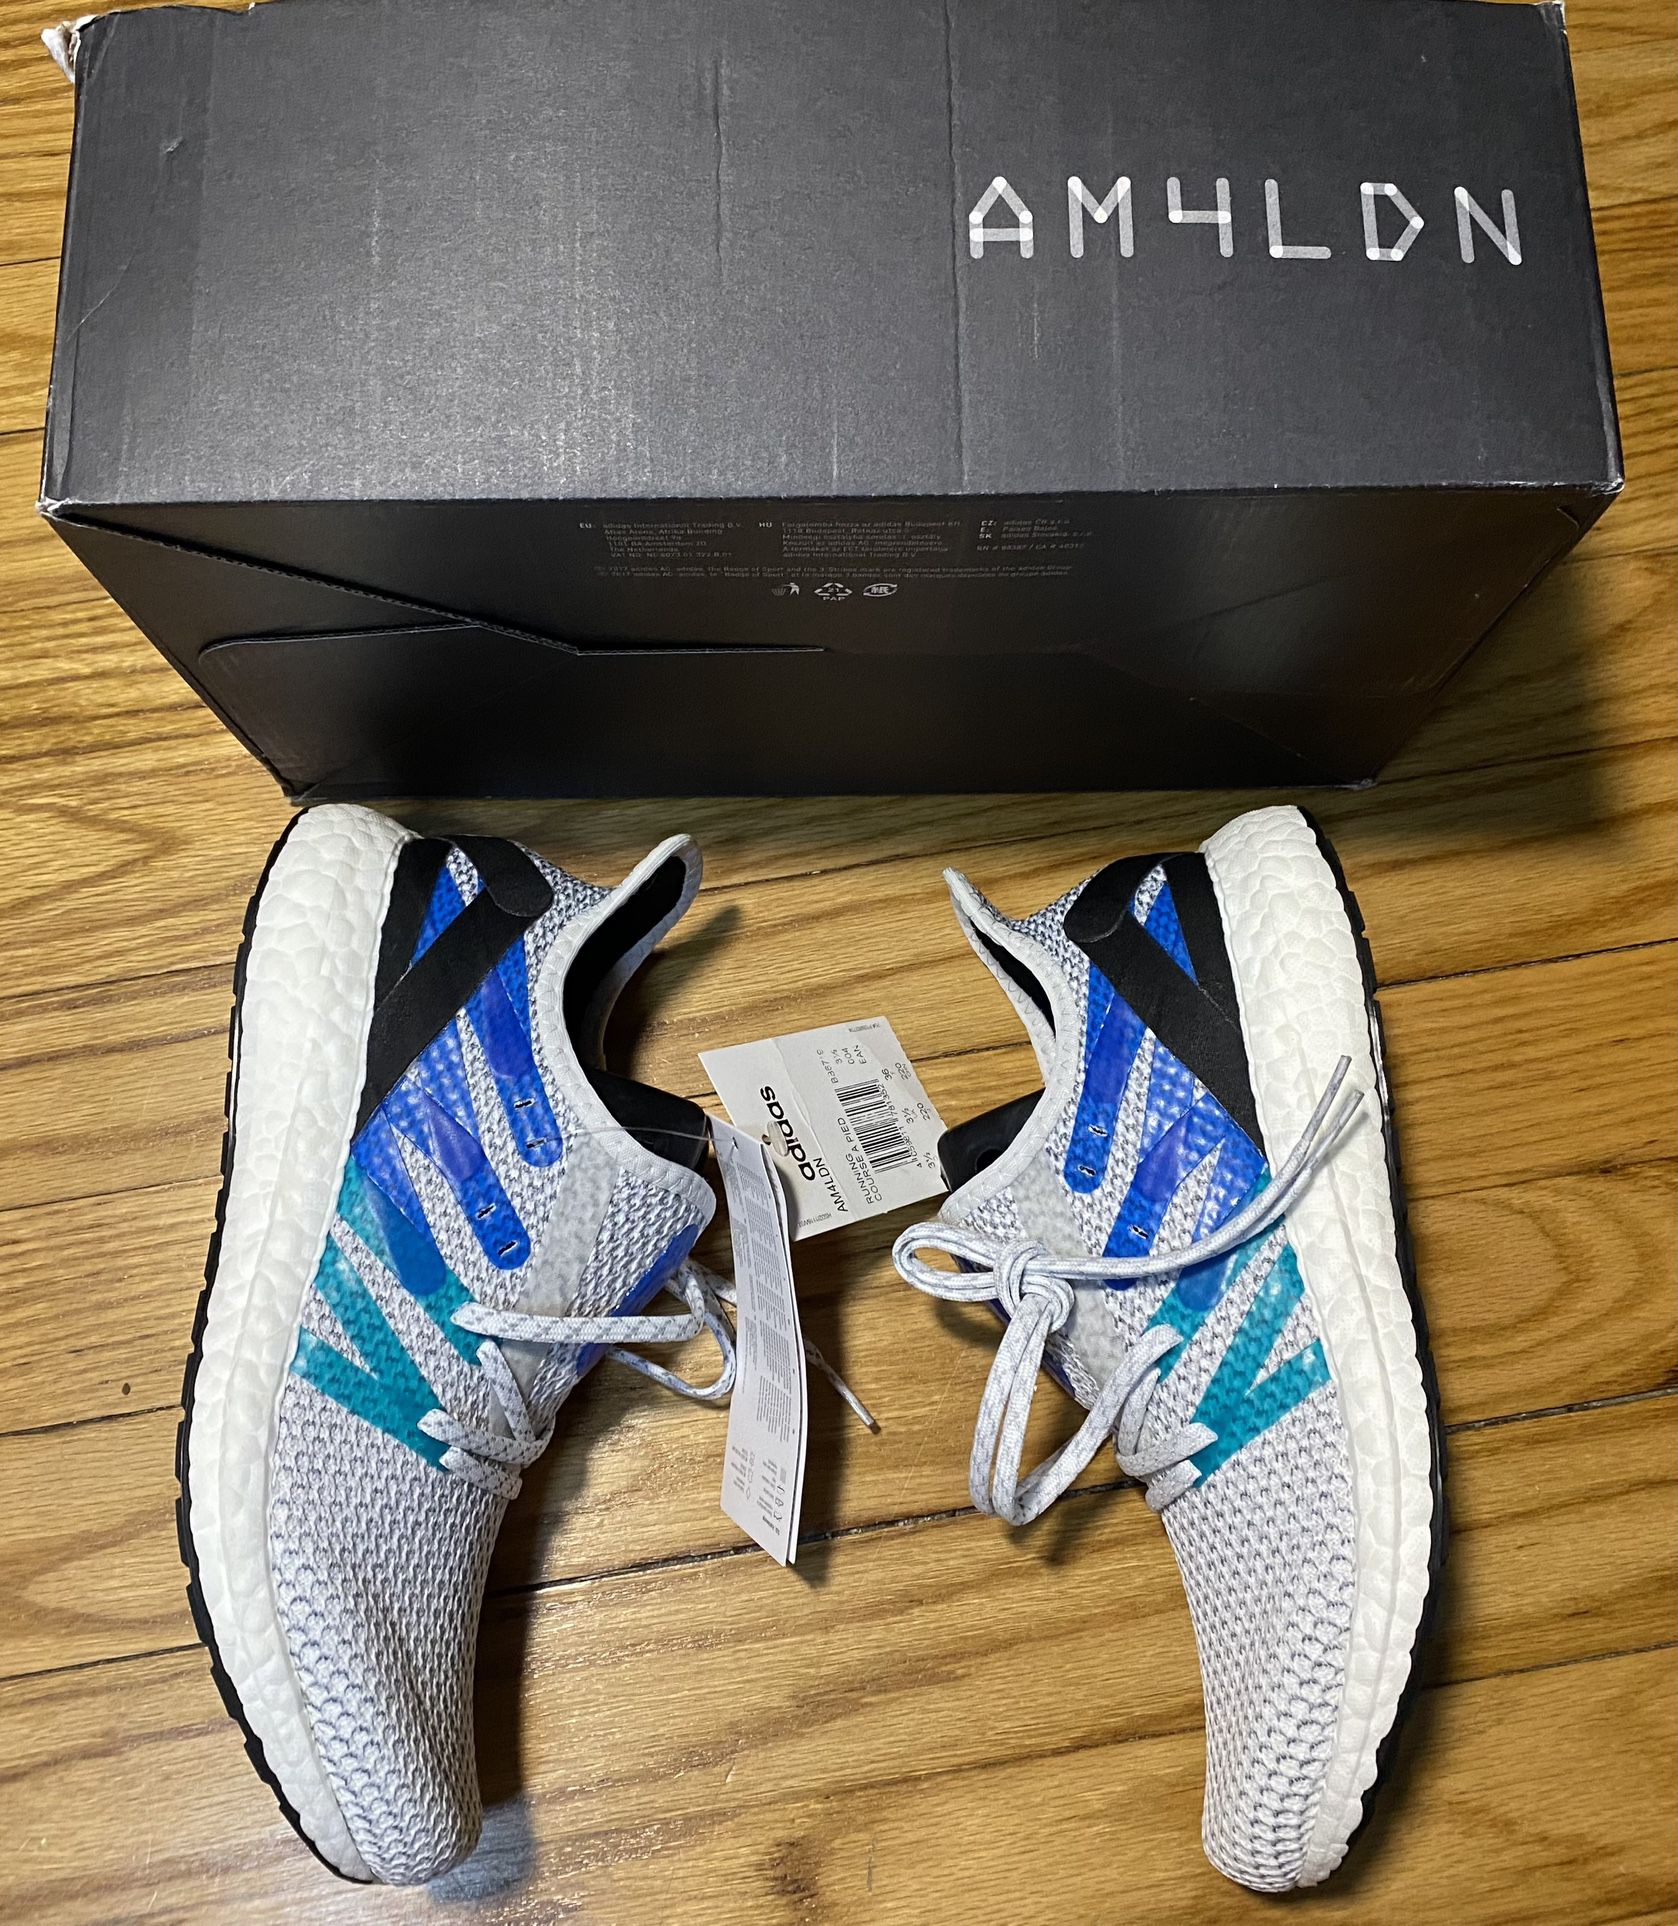 Adidas AM4LDN - Boost Speedfactory London Sz 4 New With Box!